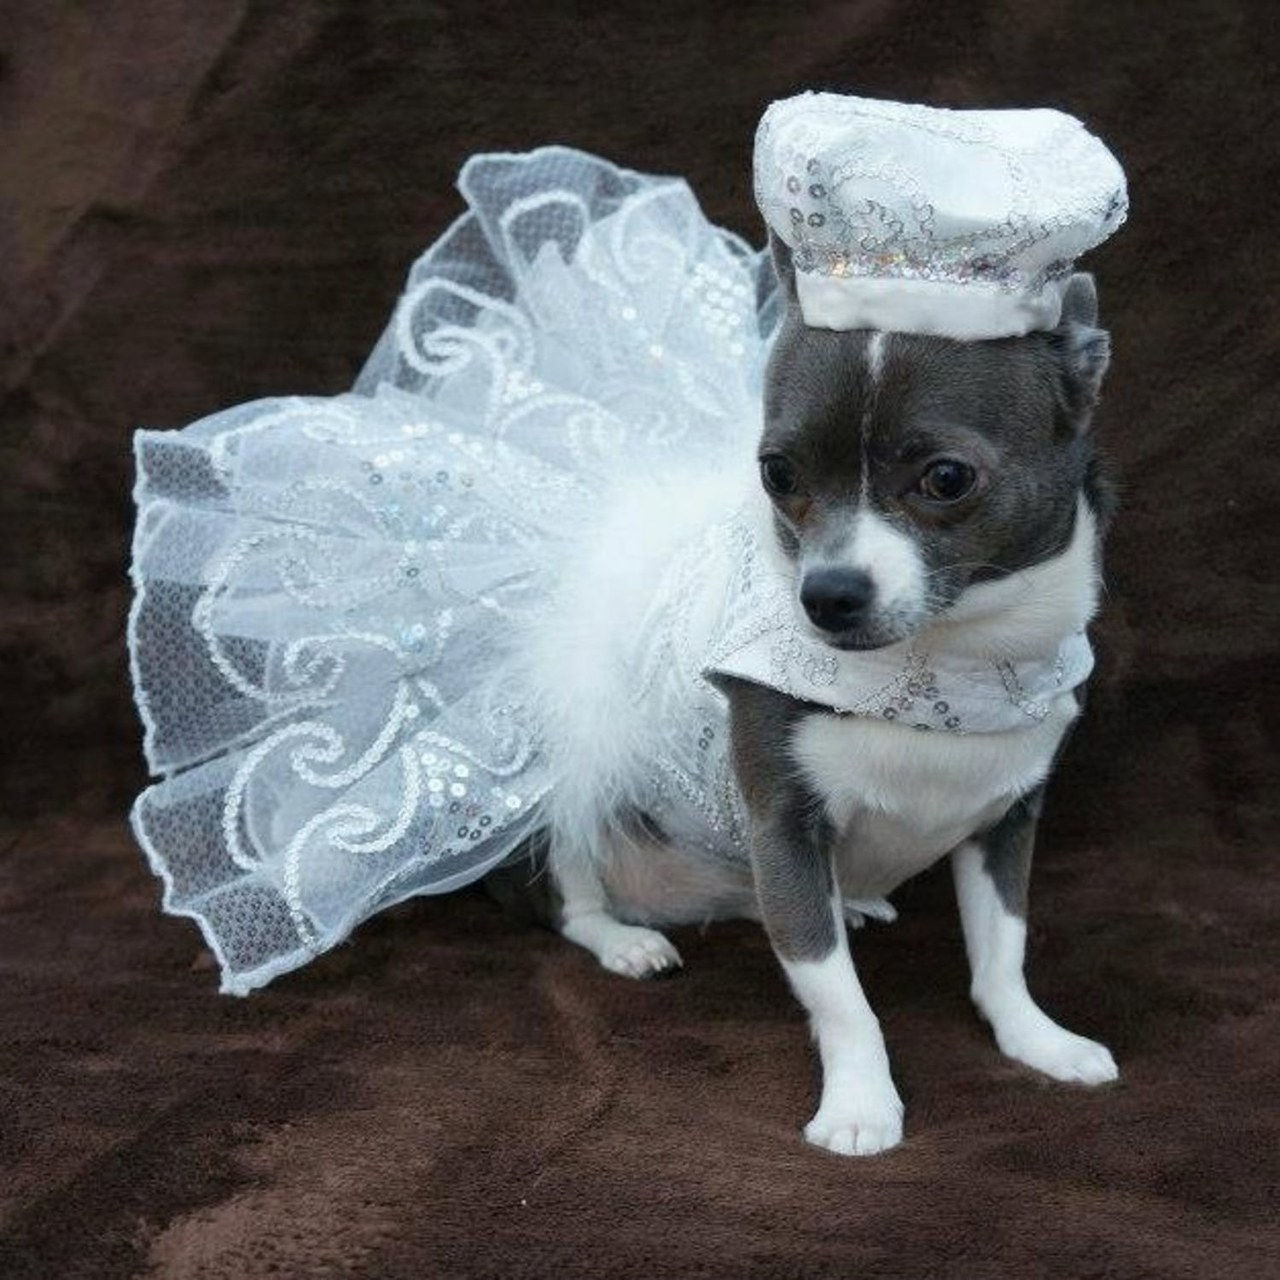 10 dogs wearing wedding dresses on etsy 0404